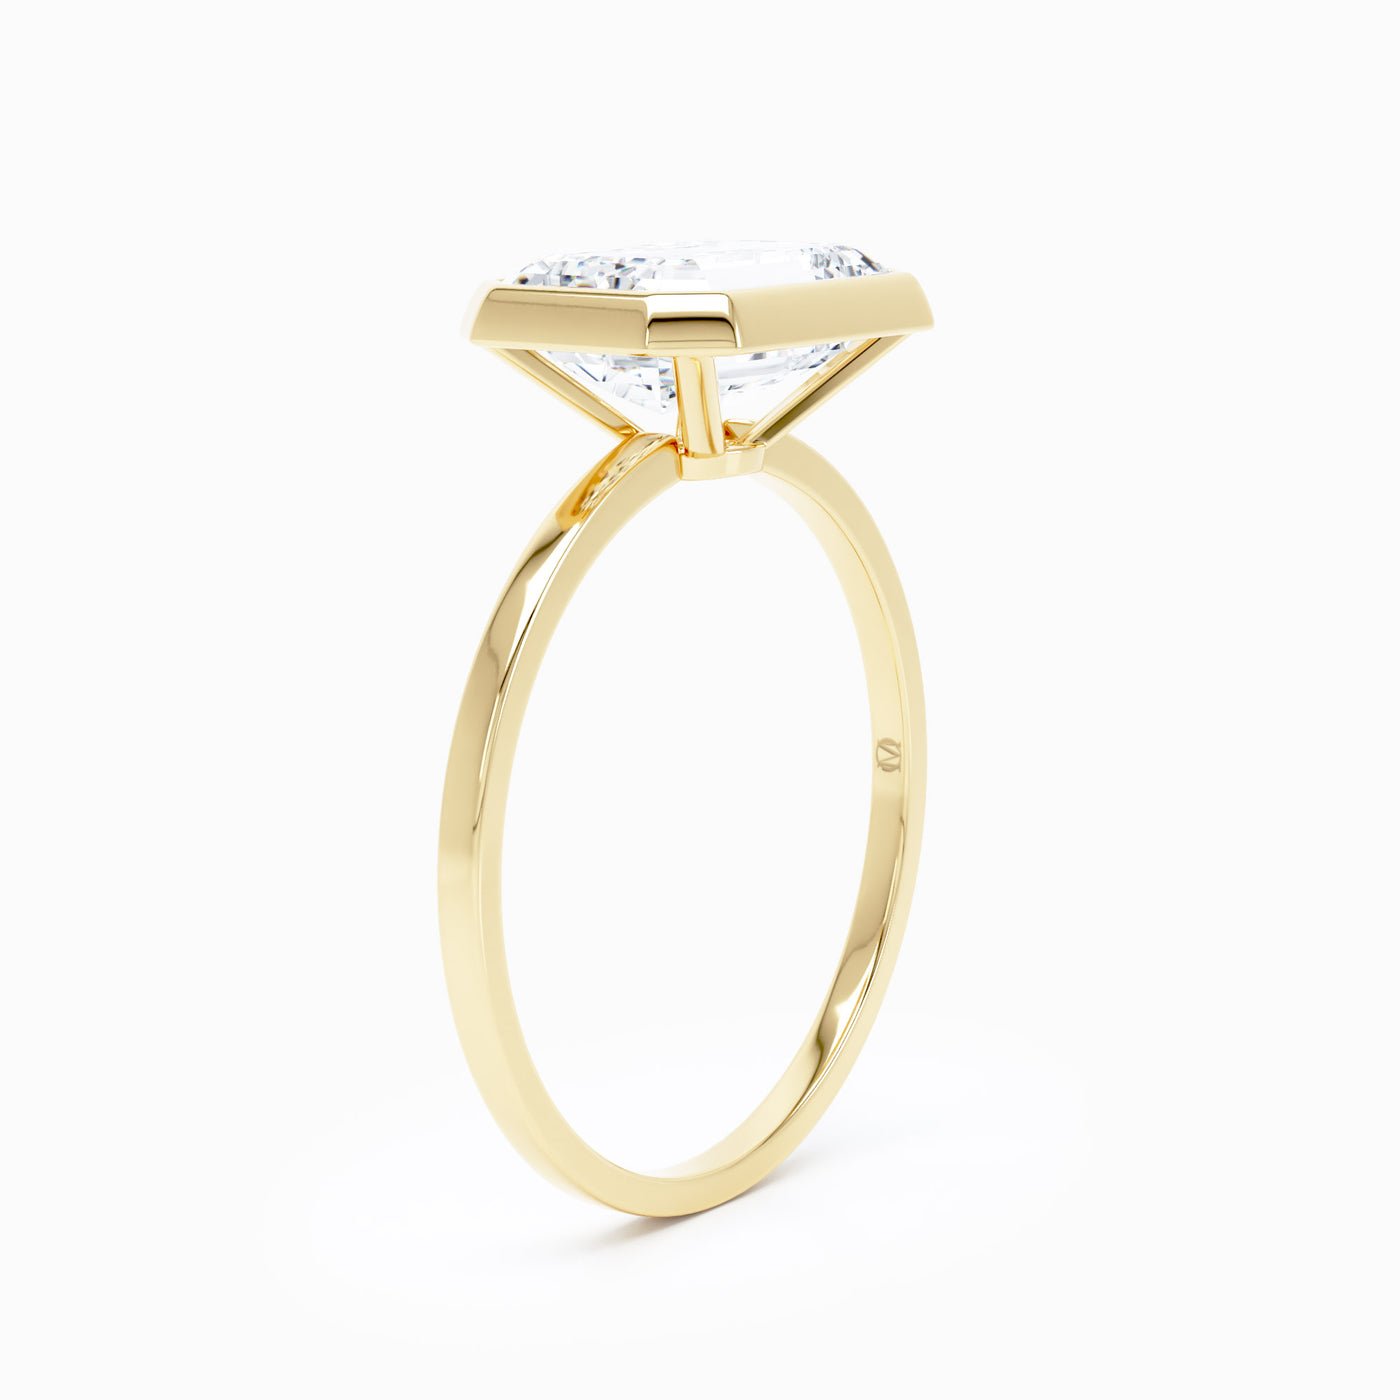 Bezel Set East West Emerald Cut Engagement Ring